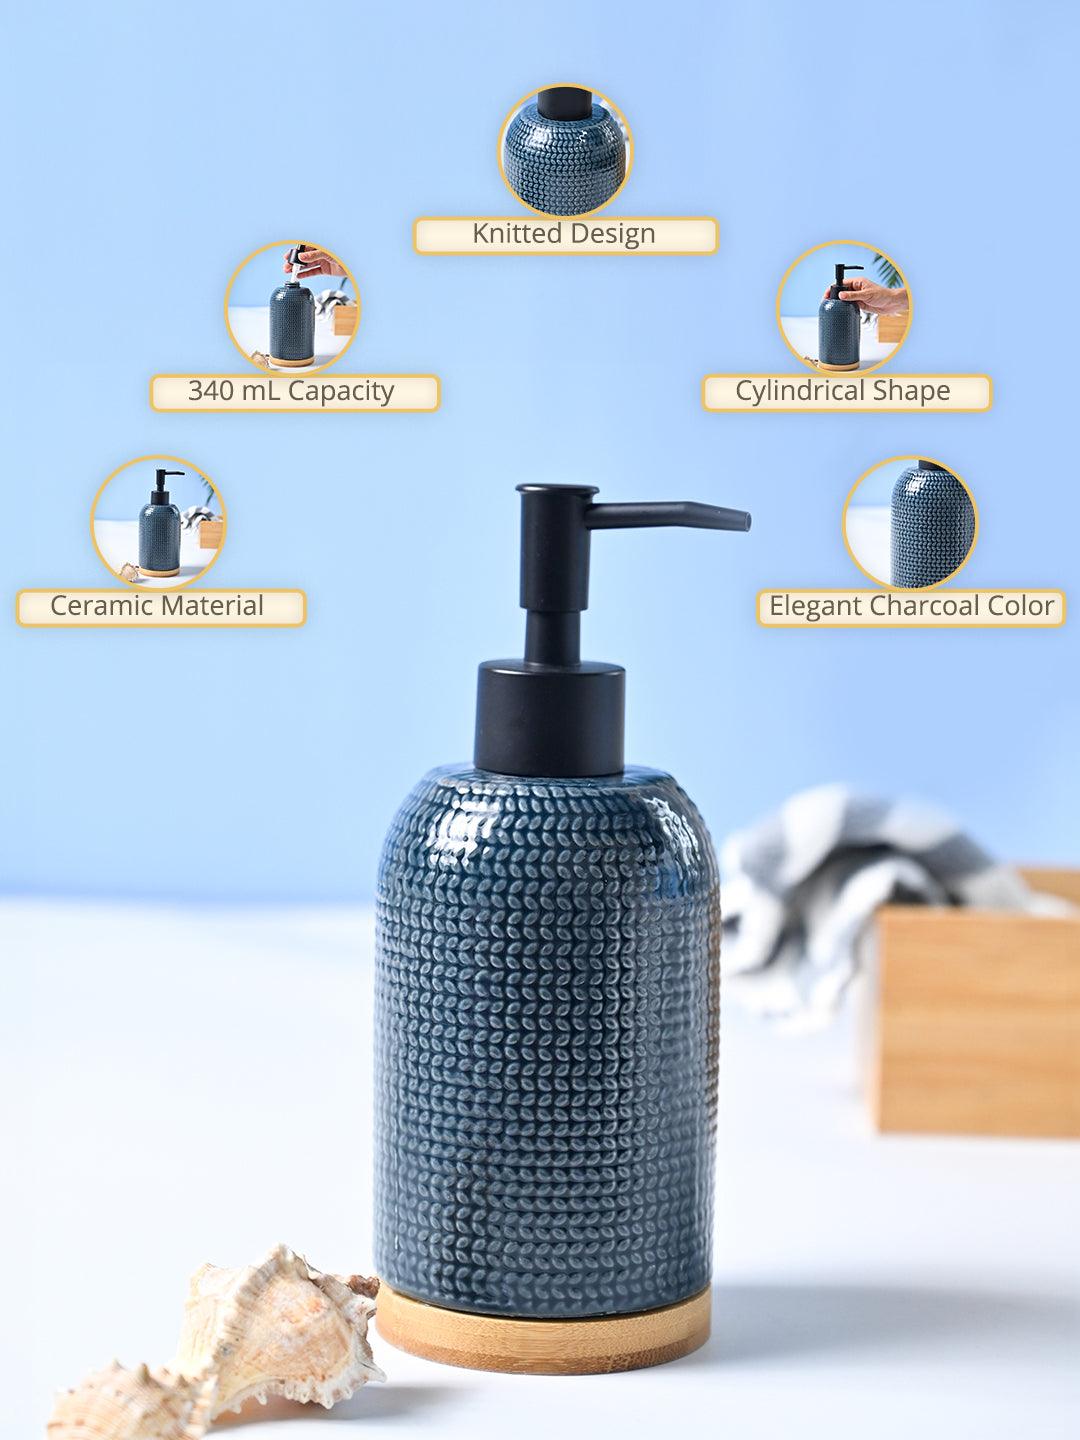 VON CASA 'Charcoal' Soap Dispenser - 340mL